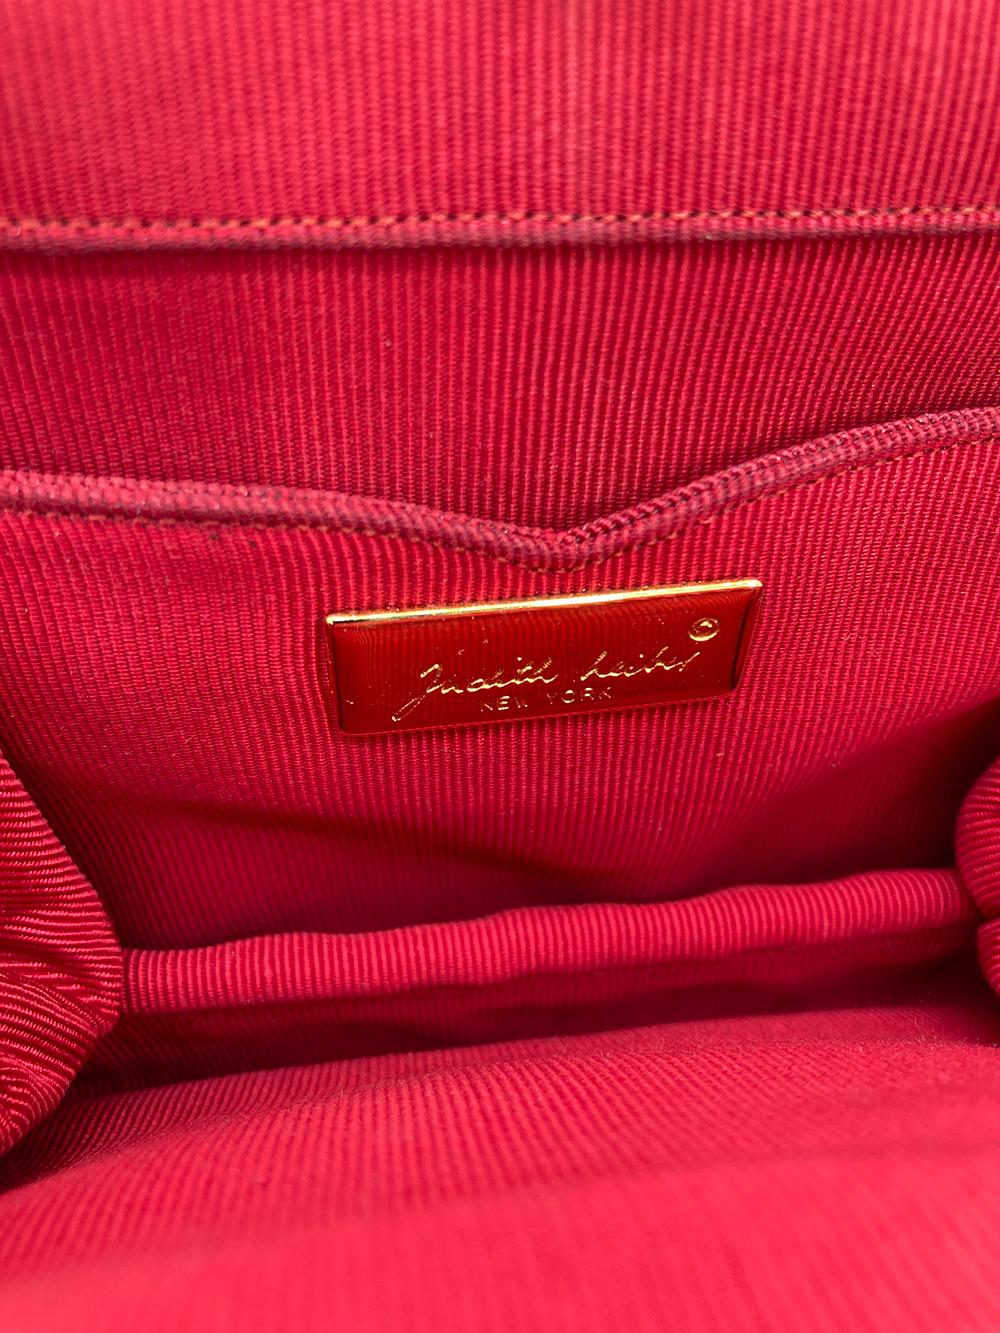 Judith Leiber Red Lizard Small Shoulder Bag For Sale 6